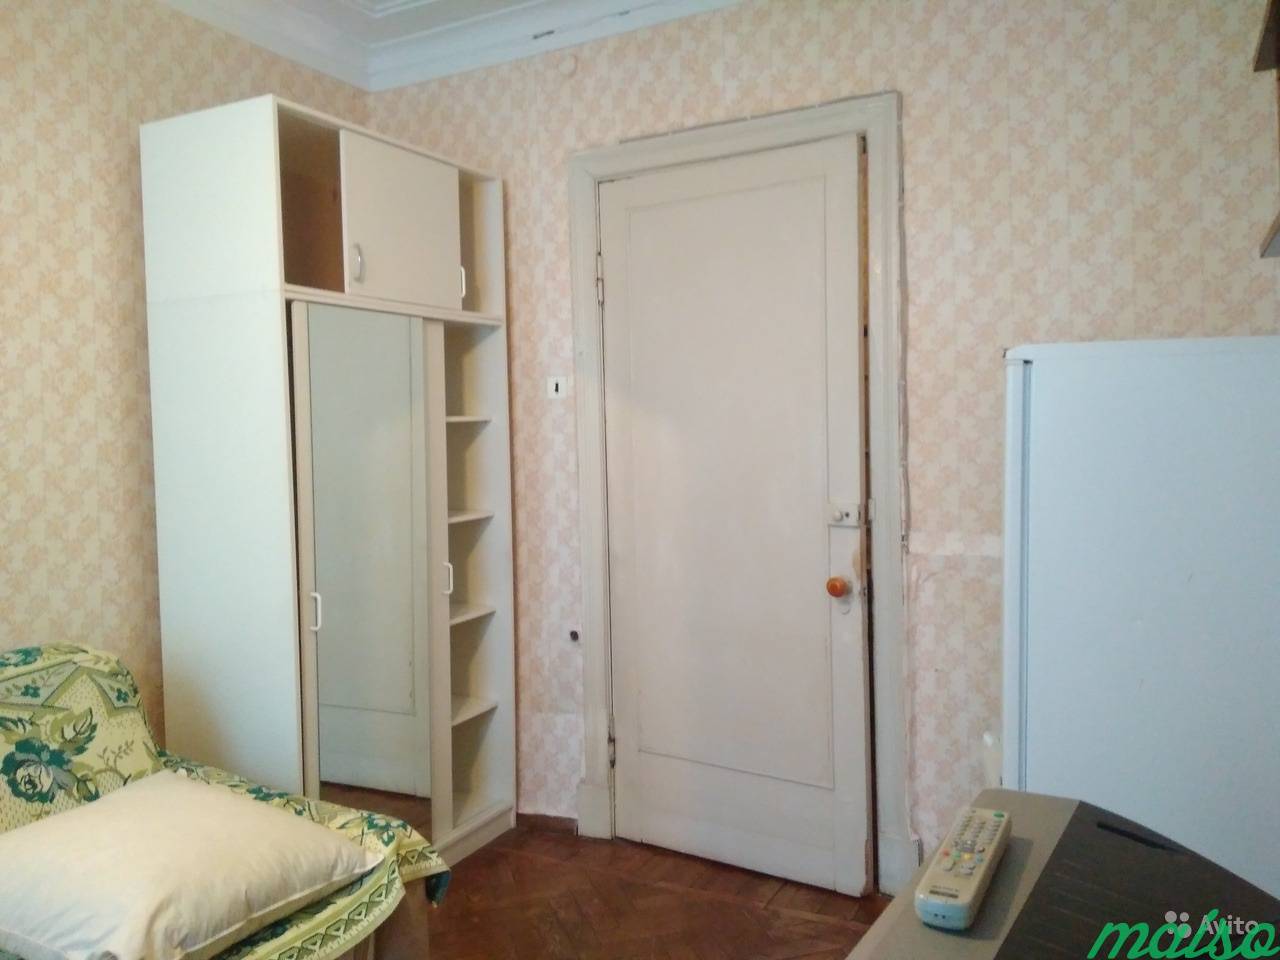 Комната 13 м² в 4-к, 2/5 эт. в Санкт-Петербурге. Фото 3